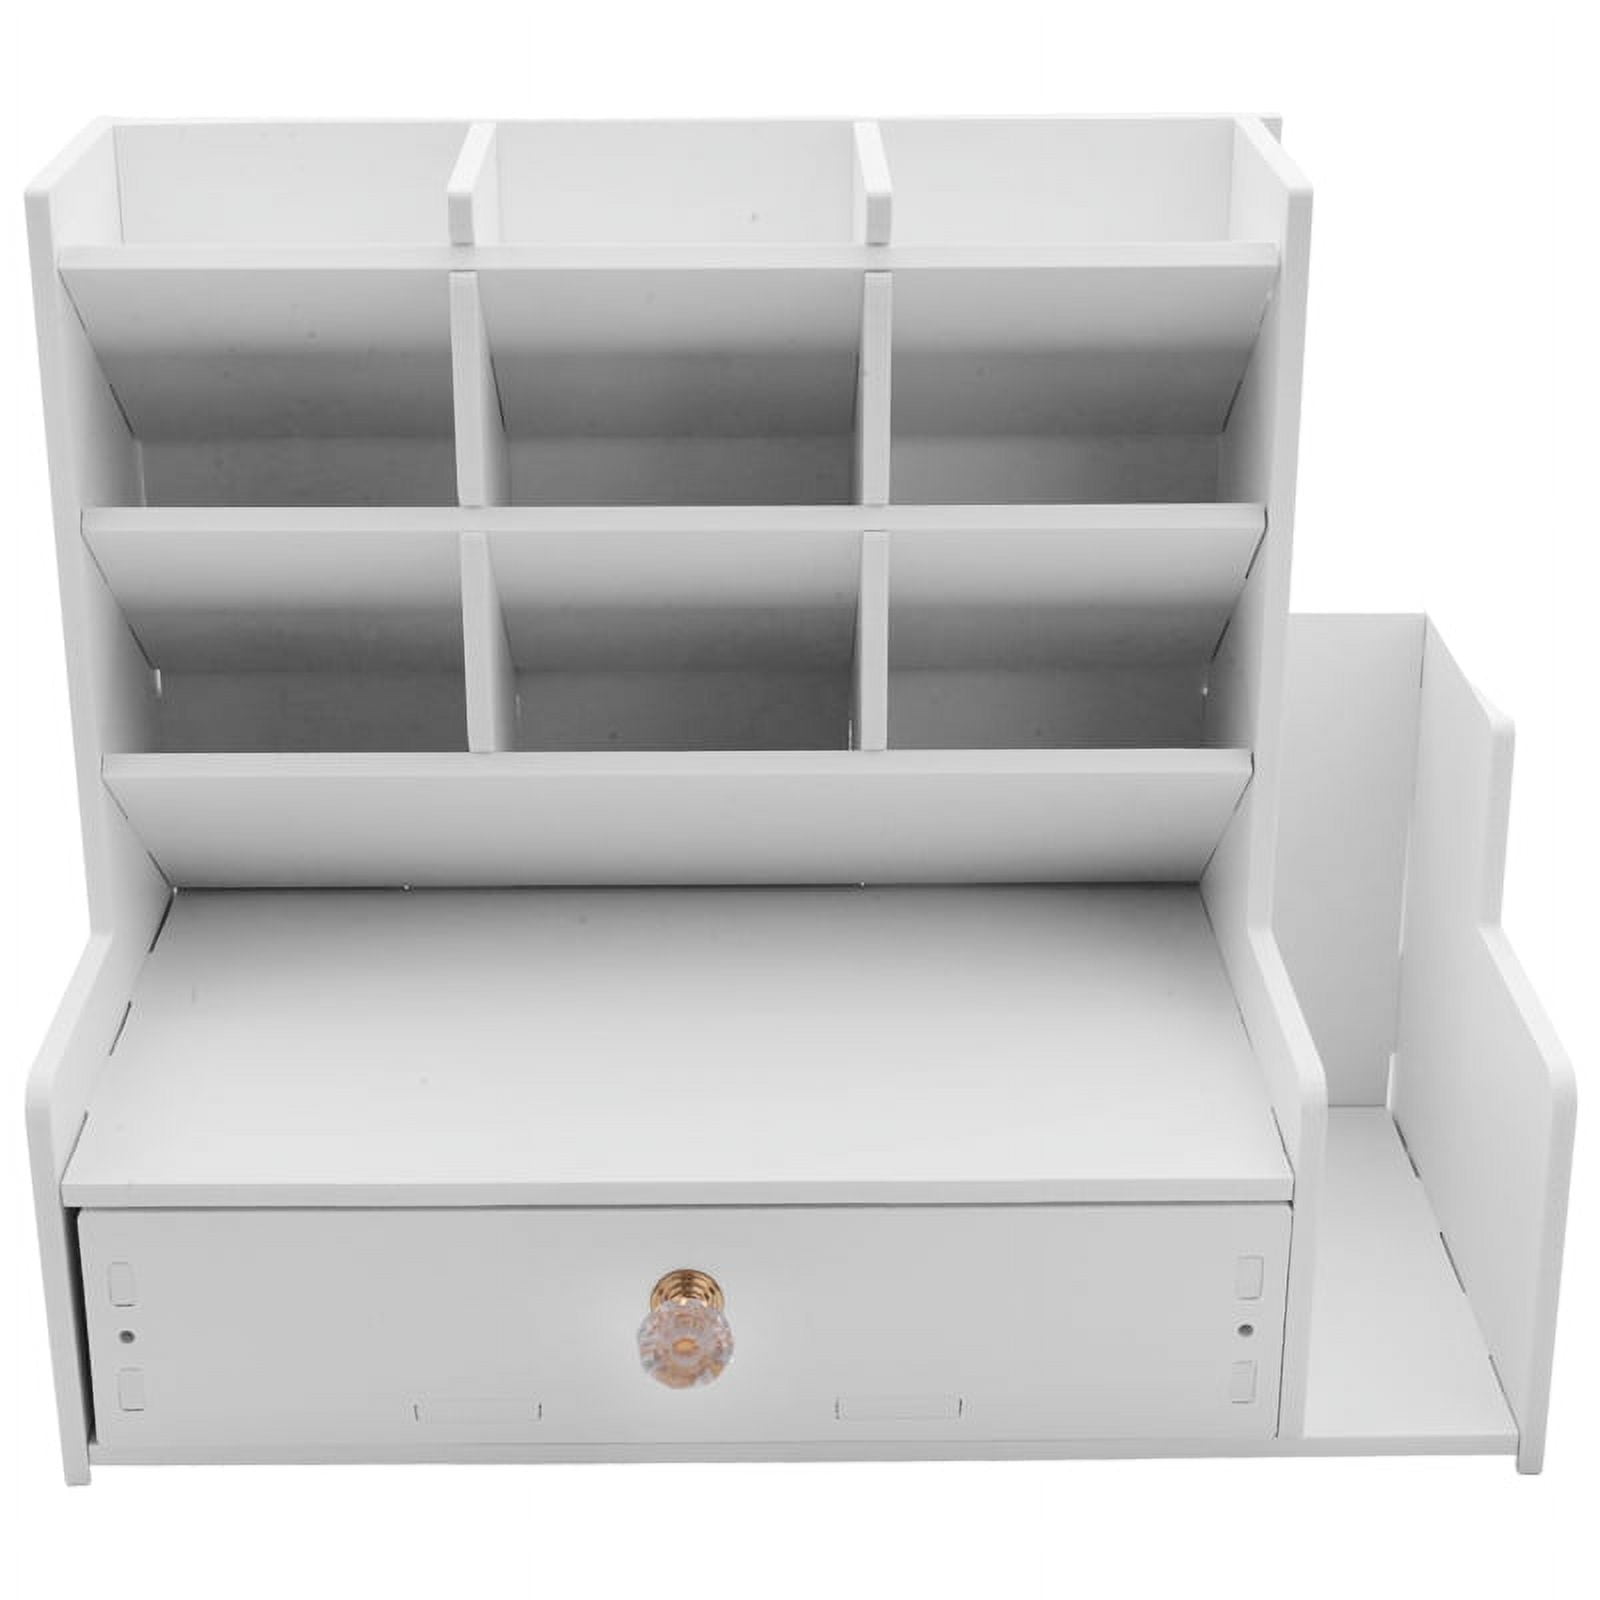 DIY Multi-function 4 Grid Desktop Organizer, Pen Holder, White/pink Storage  Case, Pencil Holder, Party Favor, School, Office Desk Organizer 